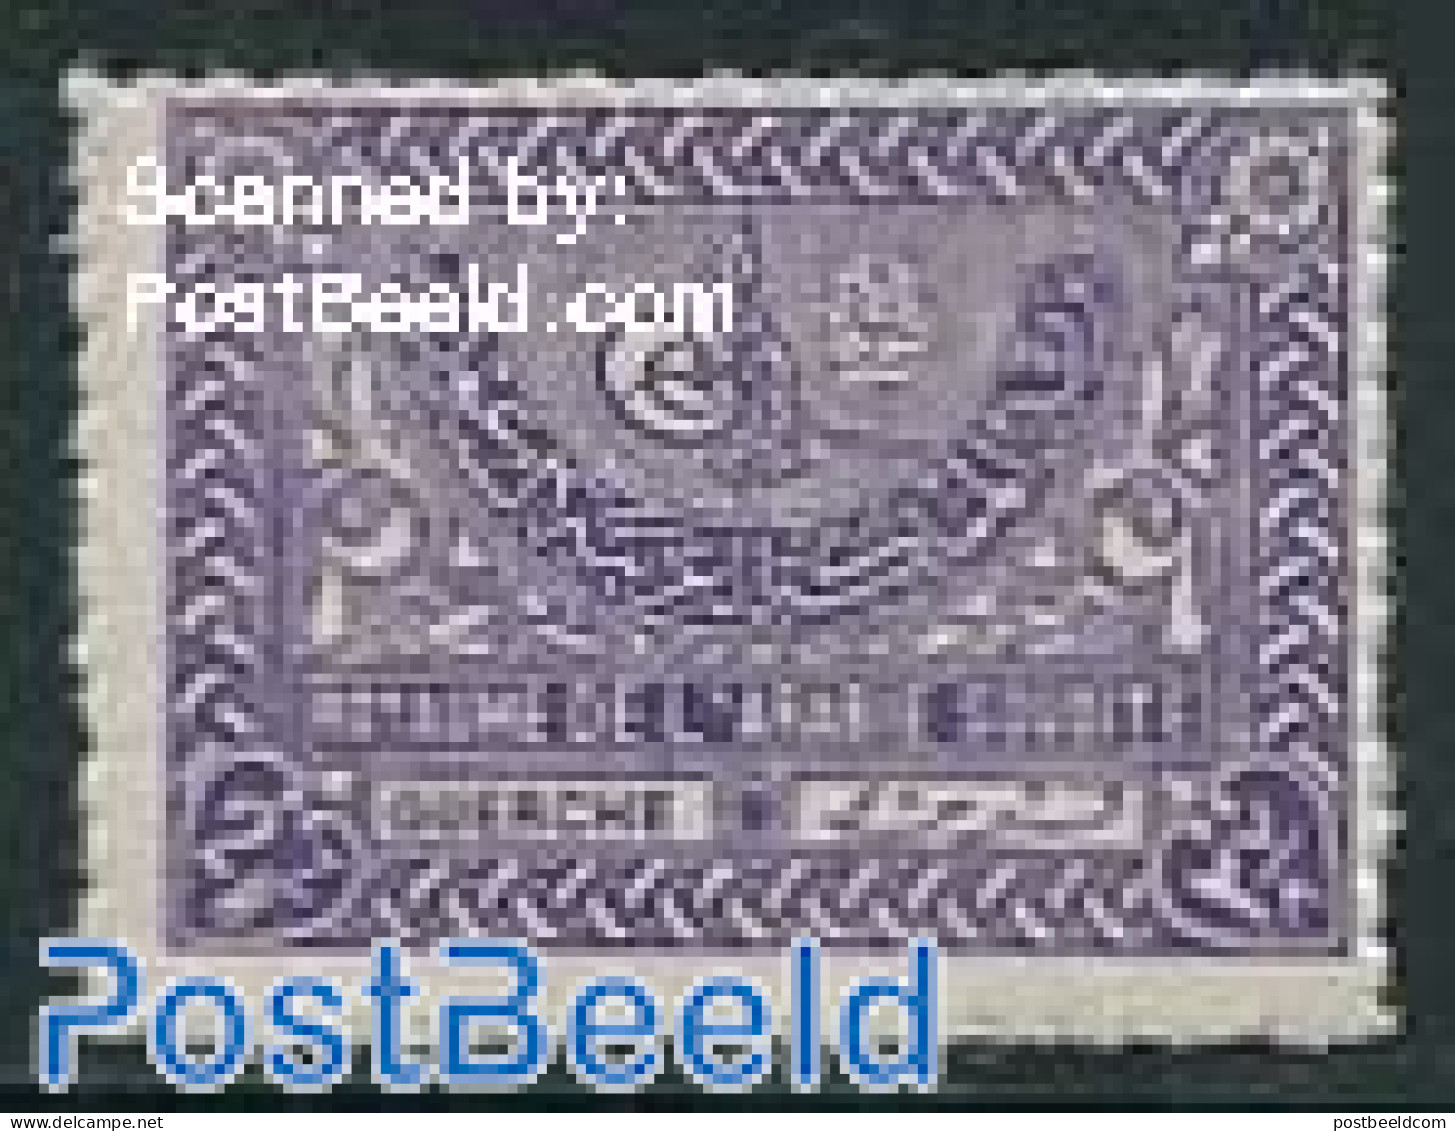 Saudi Arabia 1956 2 7/8G, Stamp Out Of Set, Mint NH - Saudi Arabia